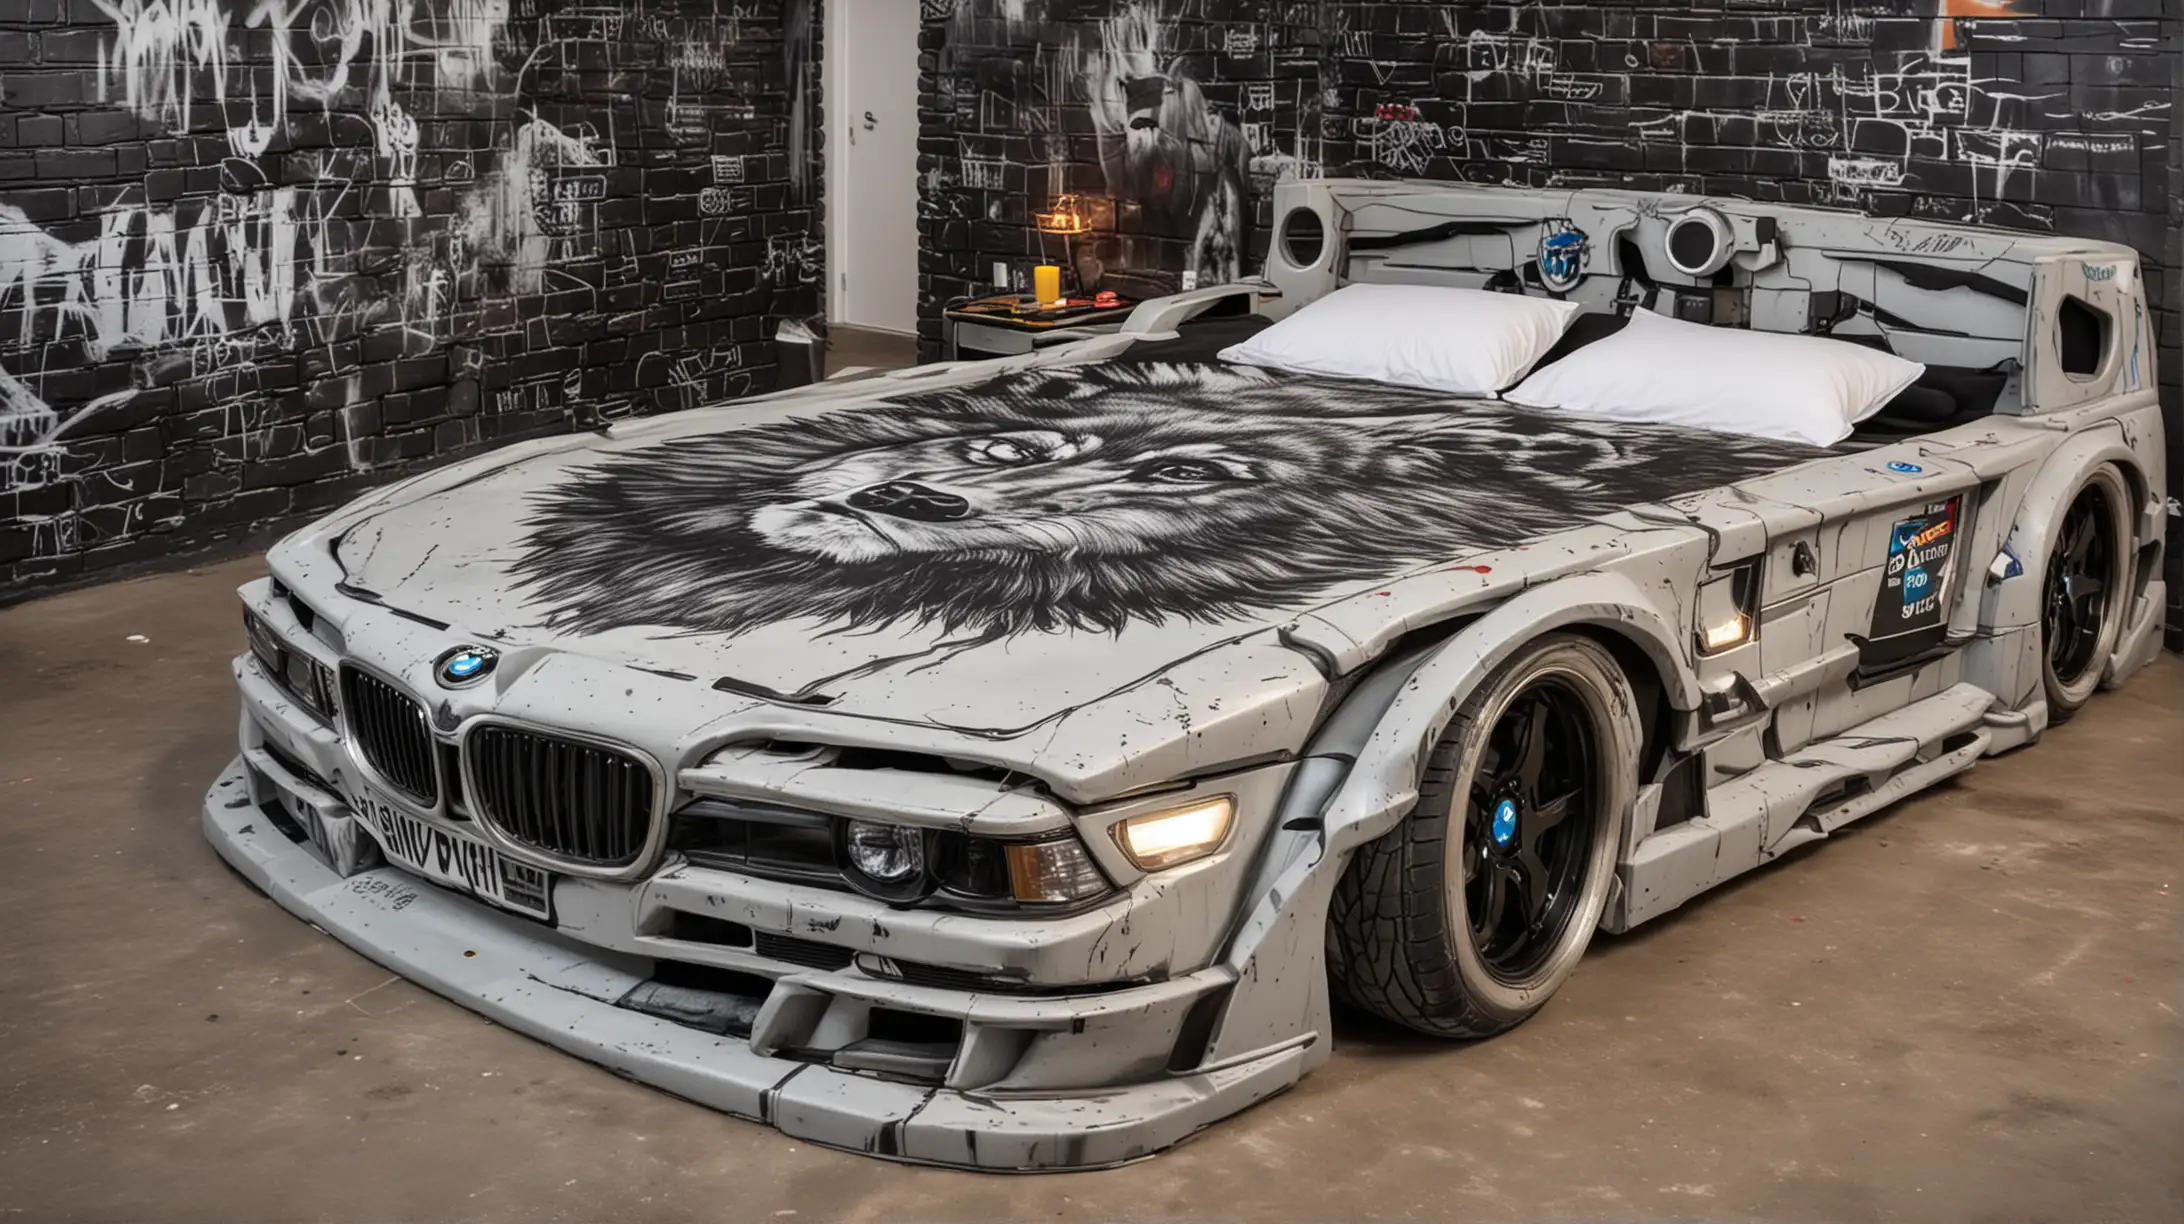 Luxury Car Bed Design with Illuminated Headlights and Graffiti Art